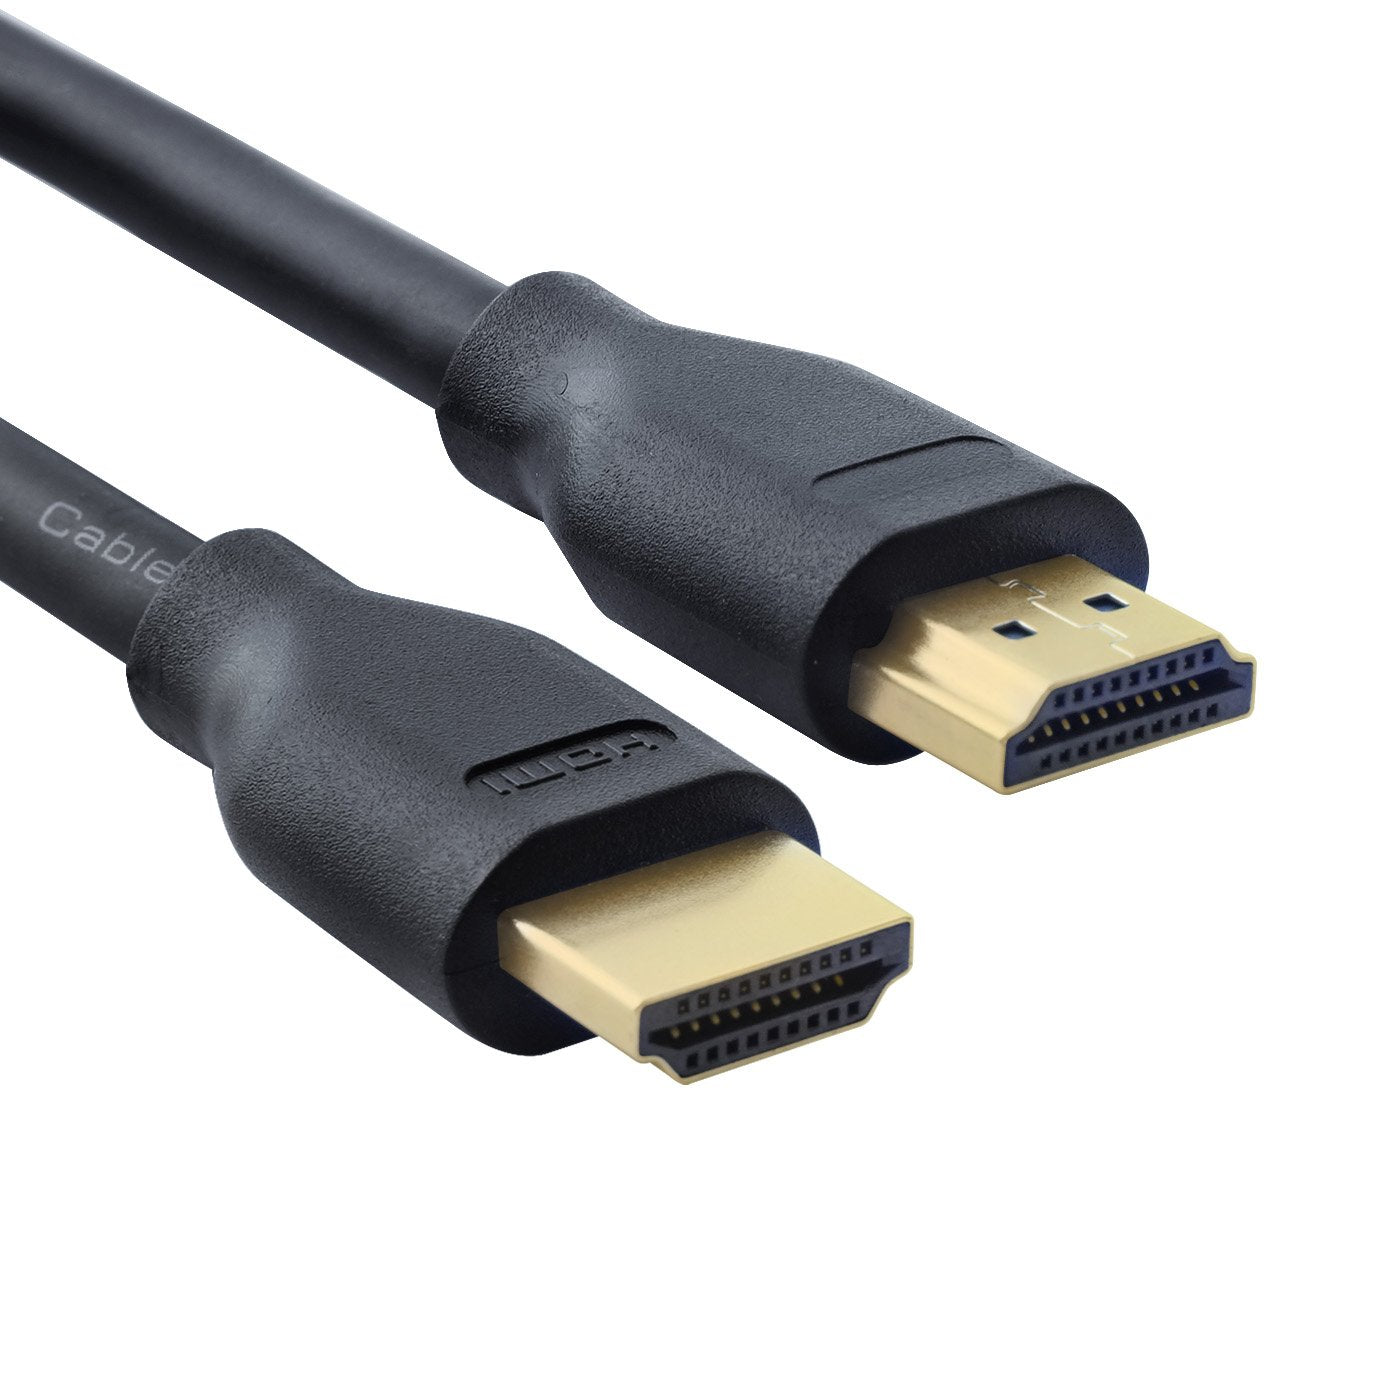 Cutting-edge HDMI Cable